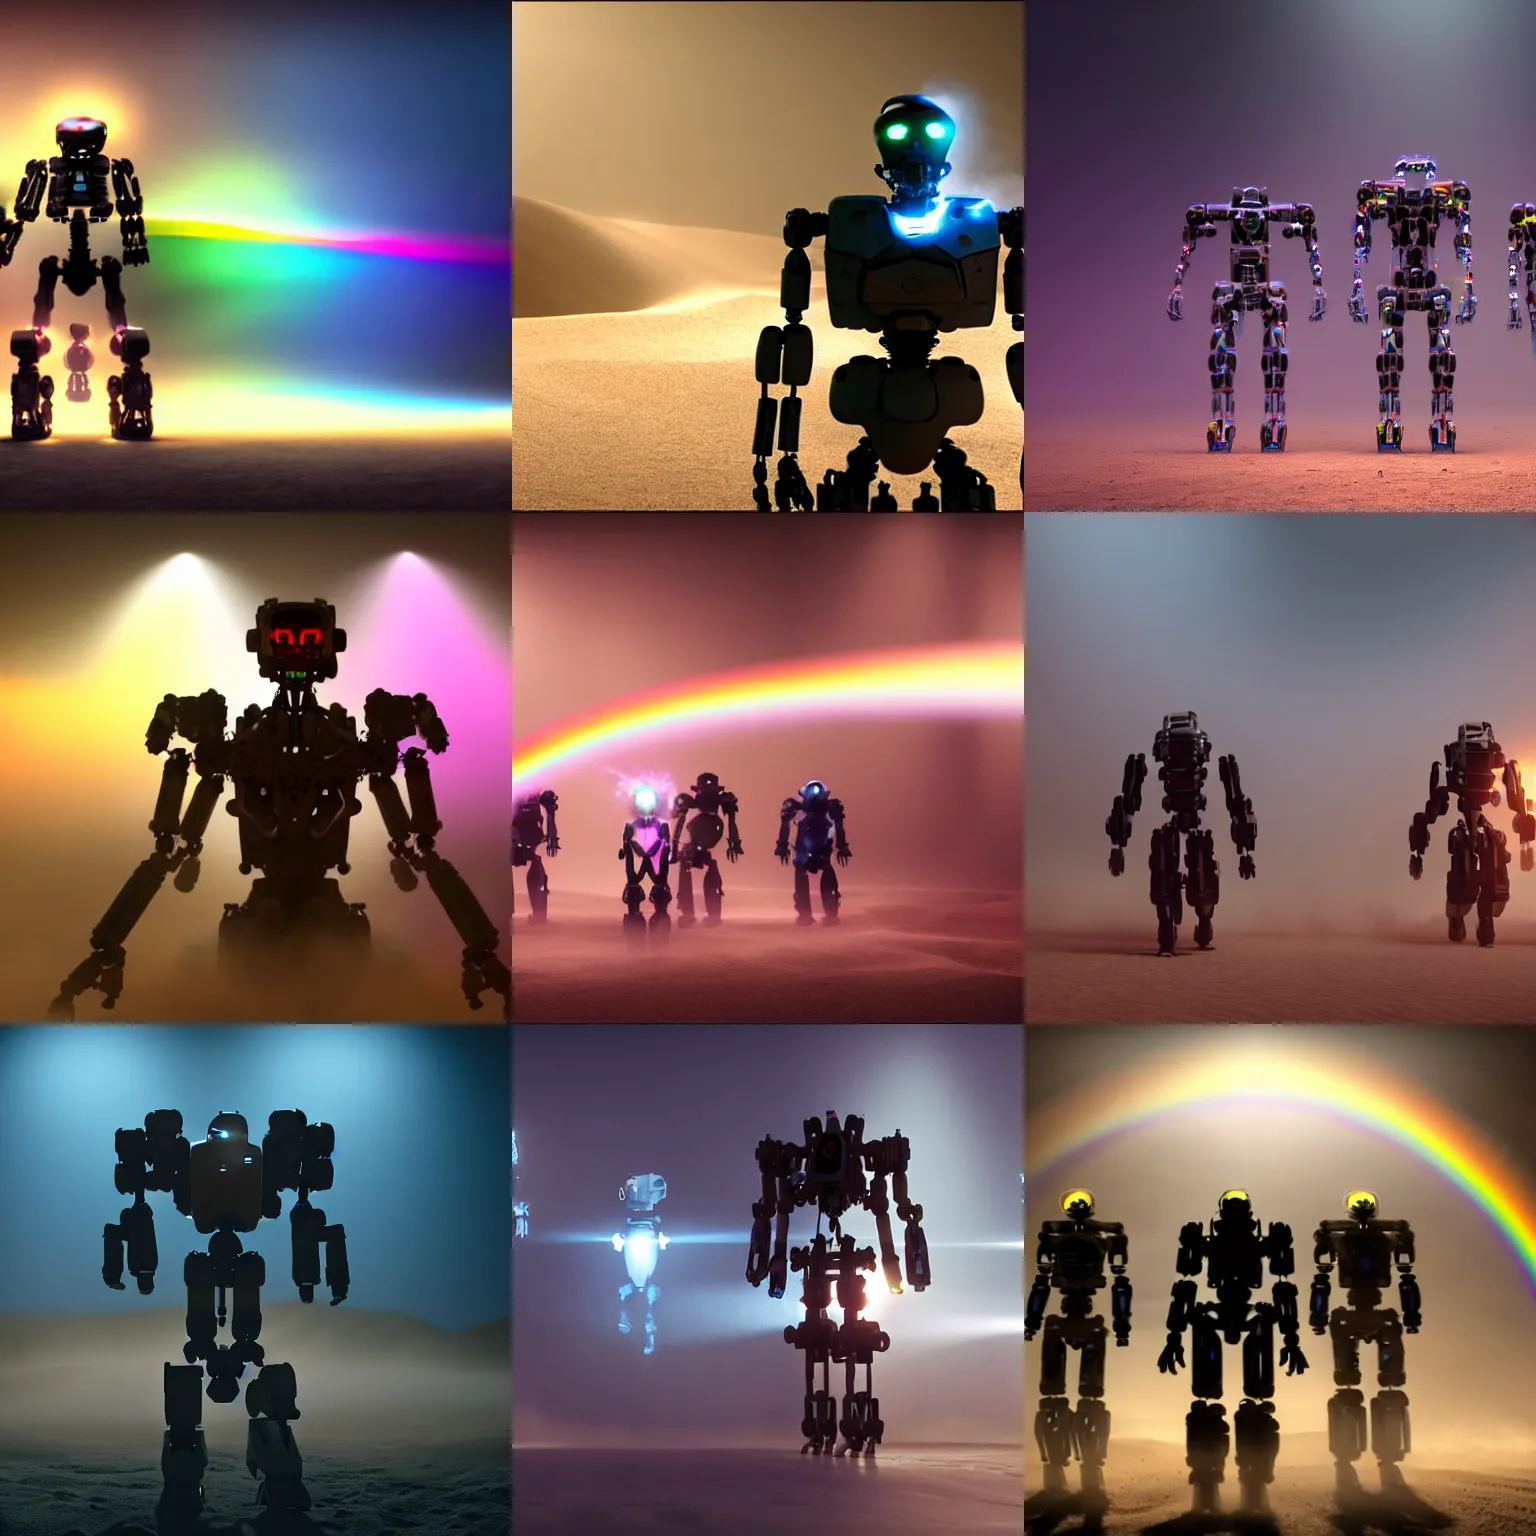 Prompt: cinematic still, colorful light spectrum phantom sandstorm swirling, center is a humanoid mech endoskeleton